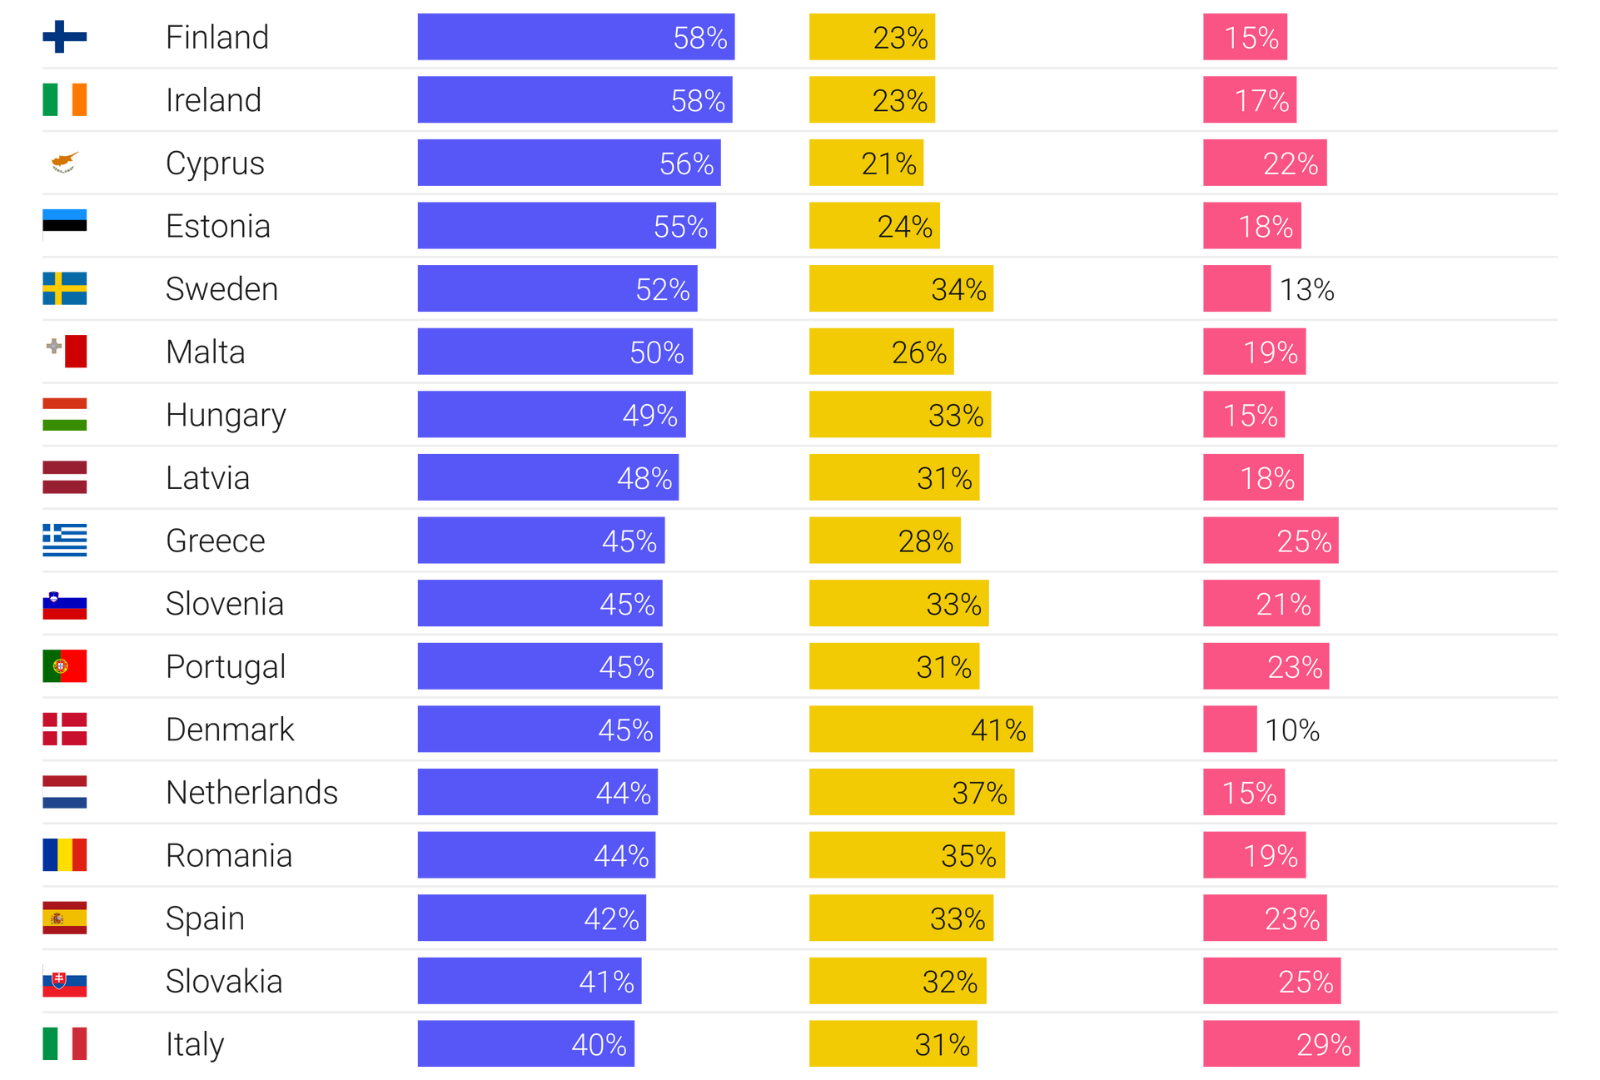 Eurobarometer Survey on Trust and Statistics